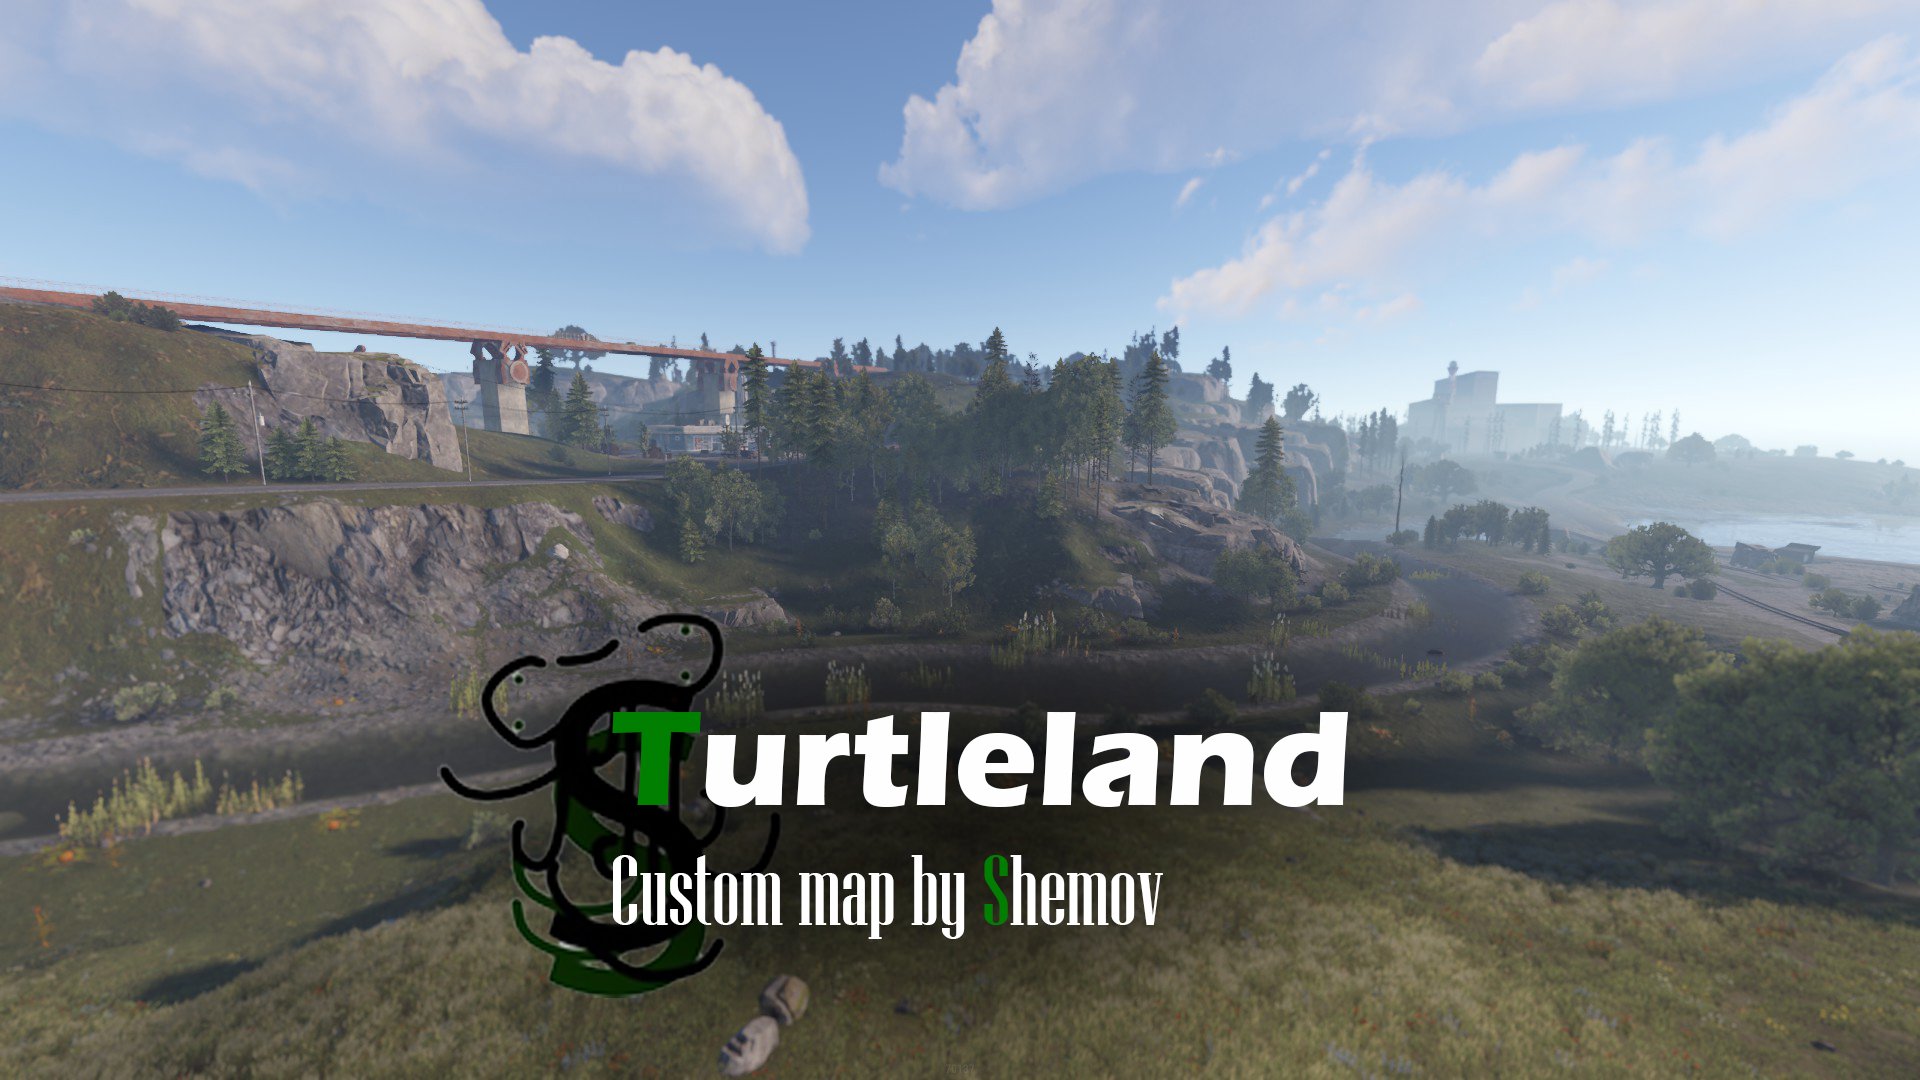 Turtleland island | CUSTOM MAP BY SHEMOV